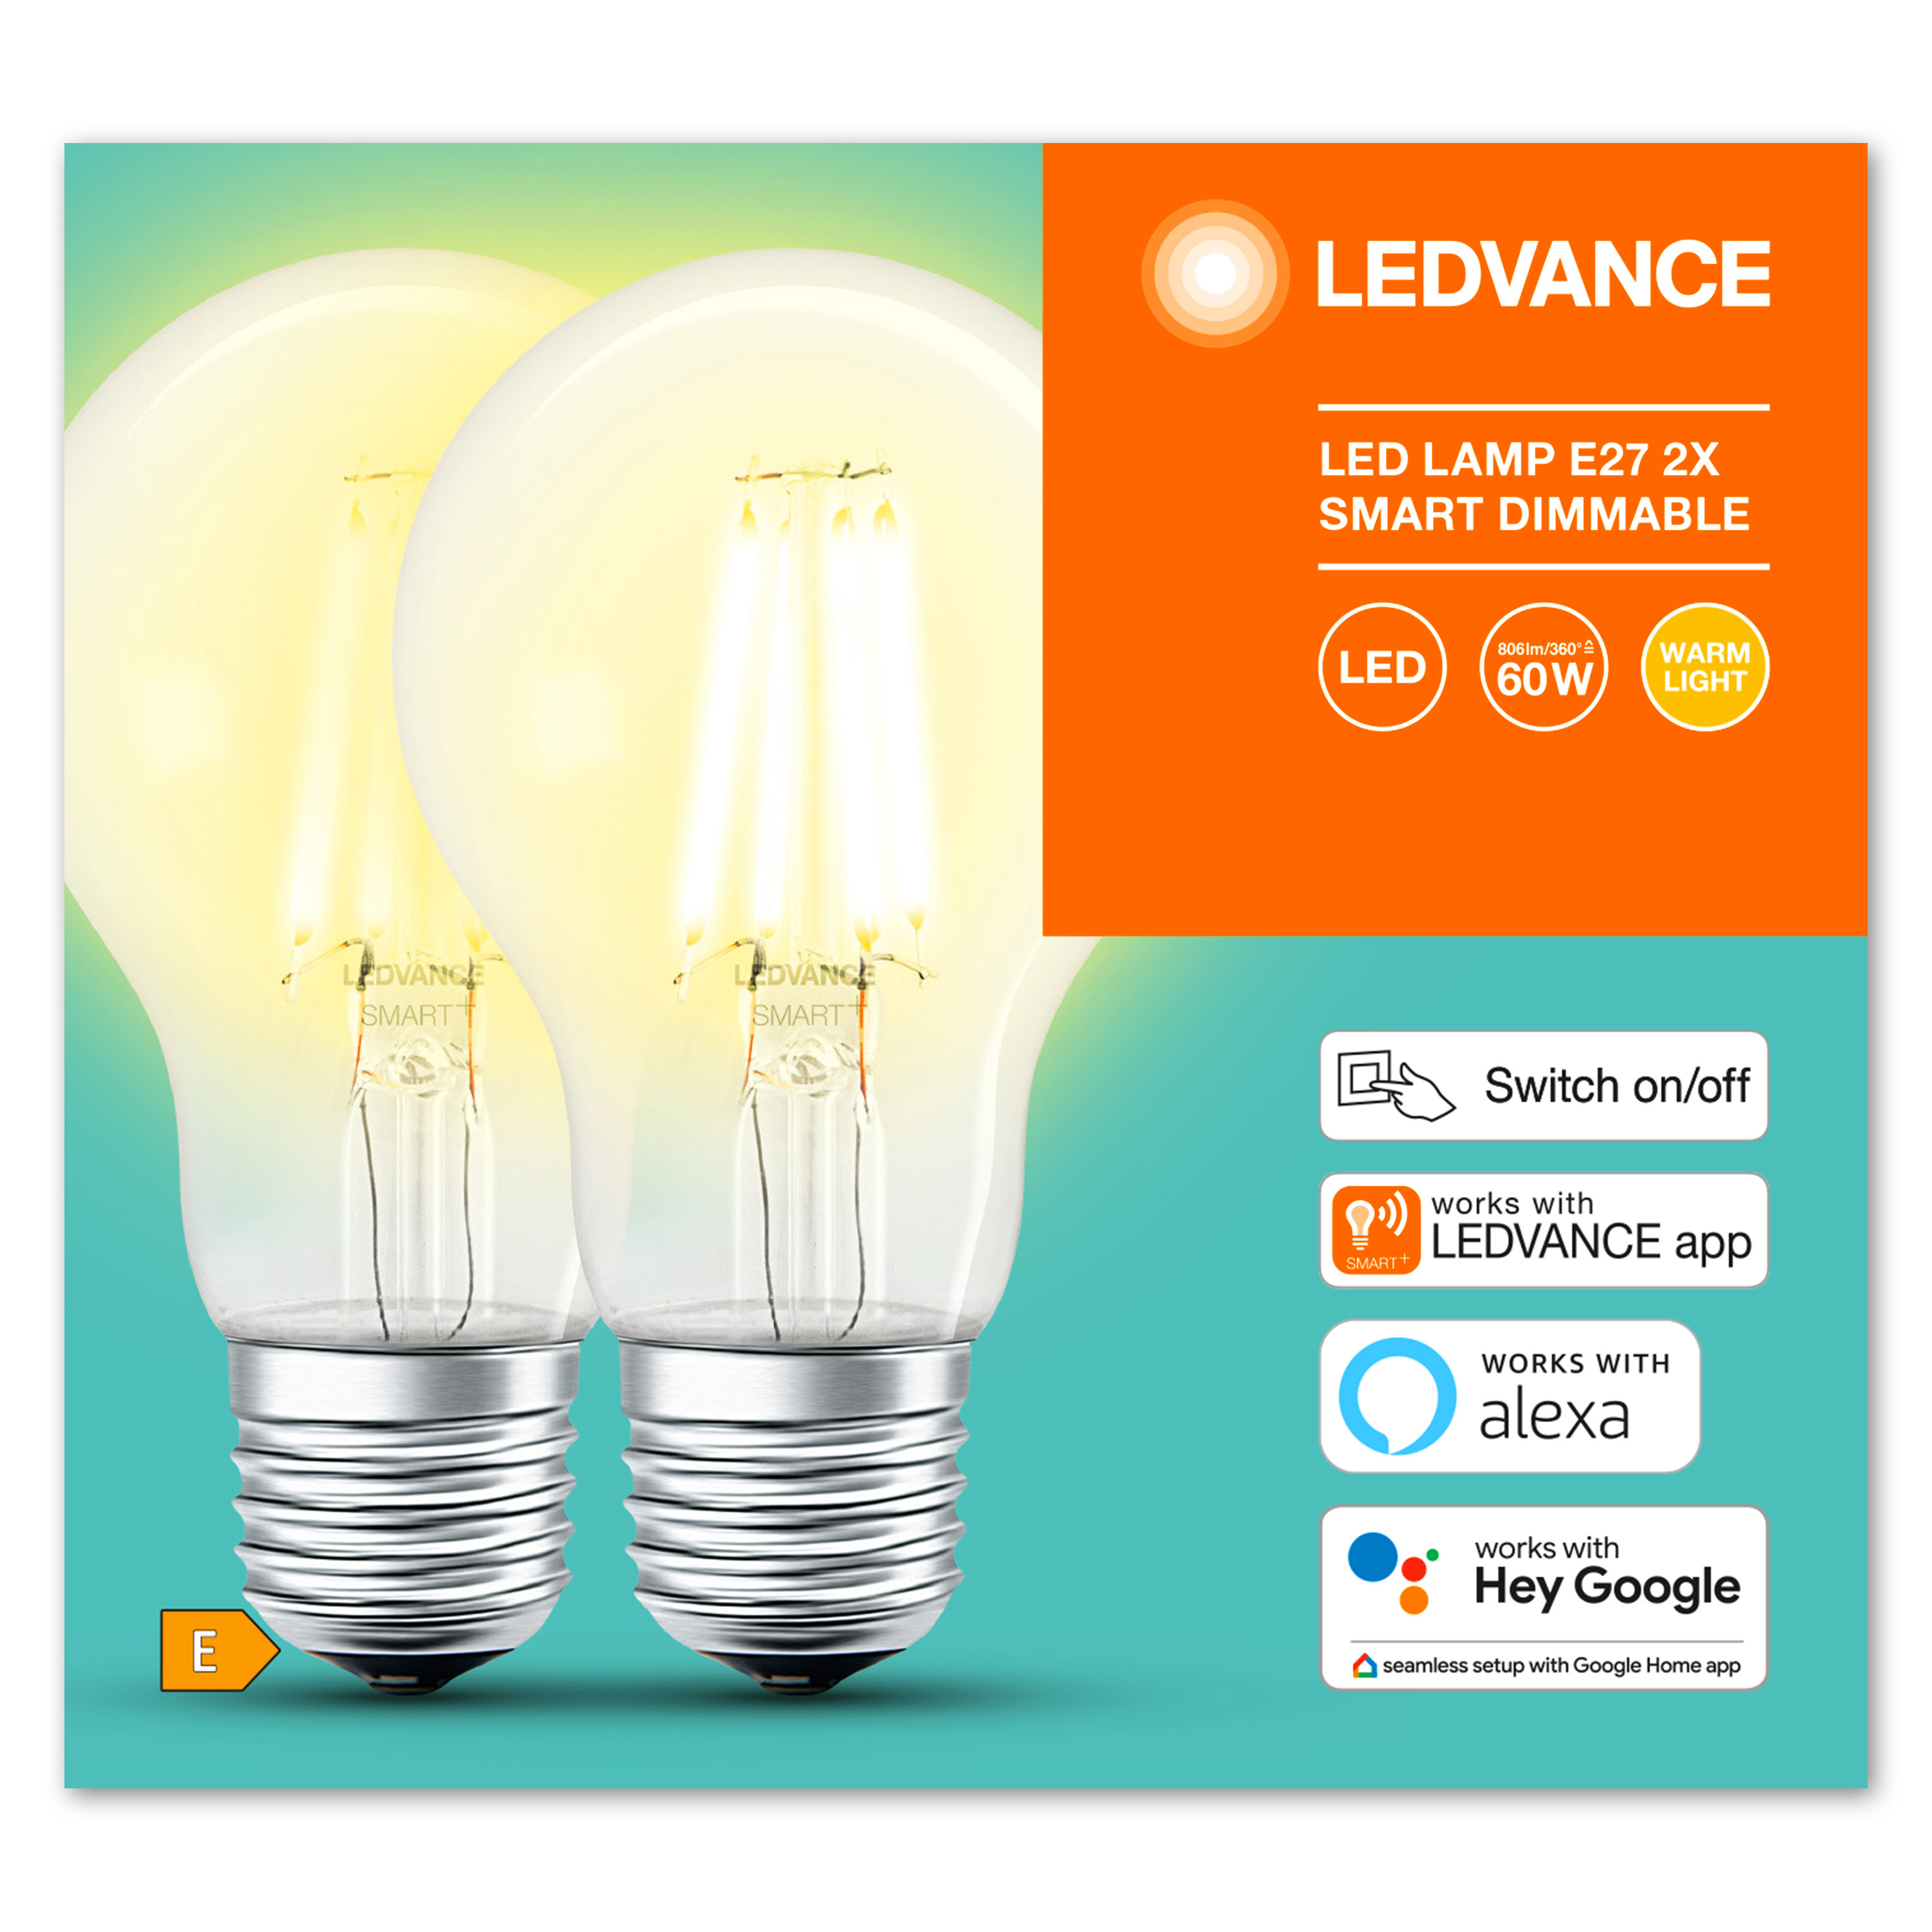 LEDVANCE VOLKSLICHT SMART+ Filament Dimmable LED Lumen Warmweiß Classic 806 Lampe